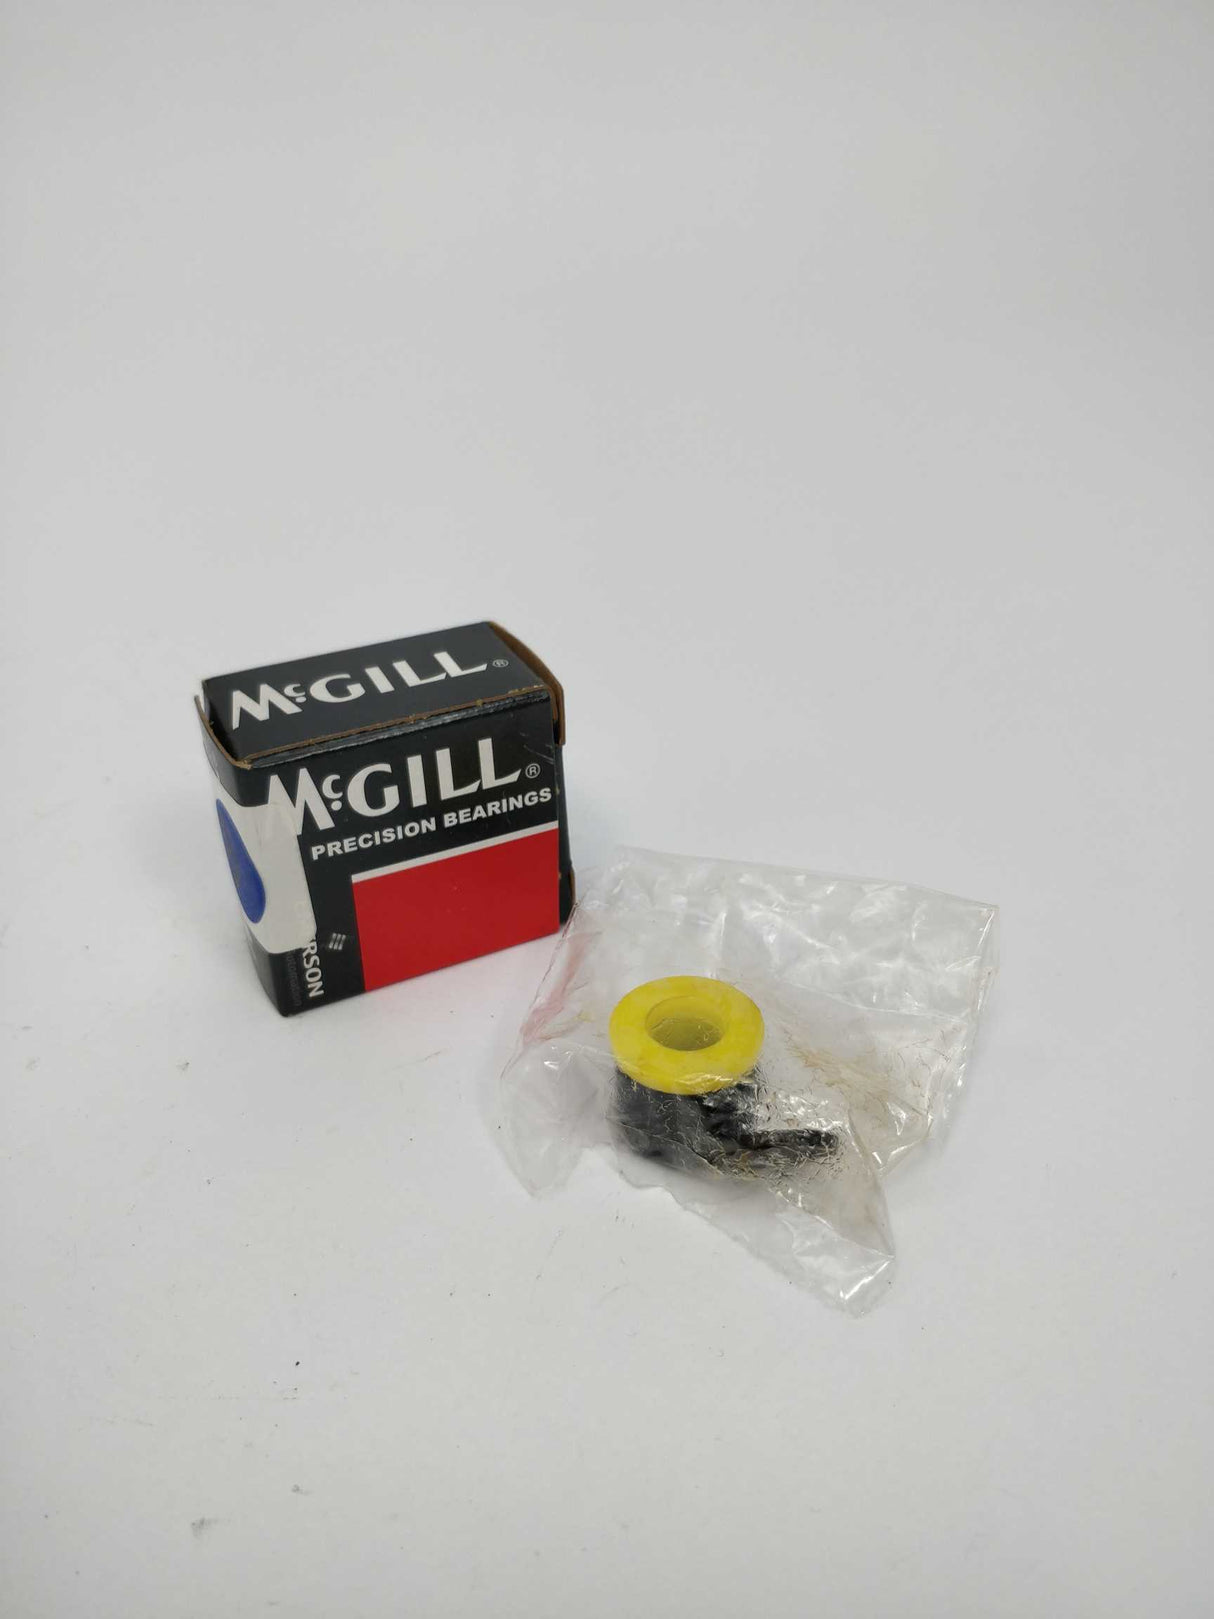 MCGILL CF 3/4 S 62 CAM FOLLOWER LUBRI-DISC